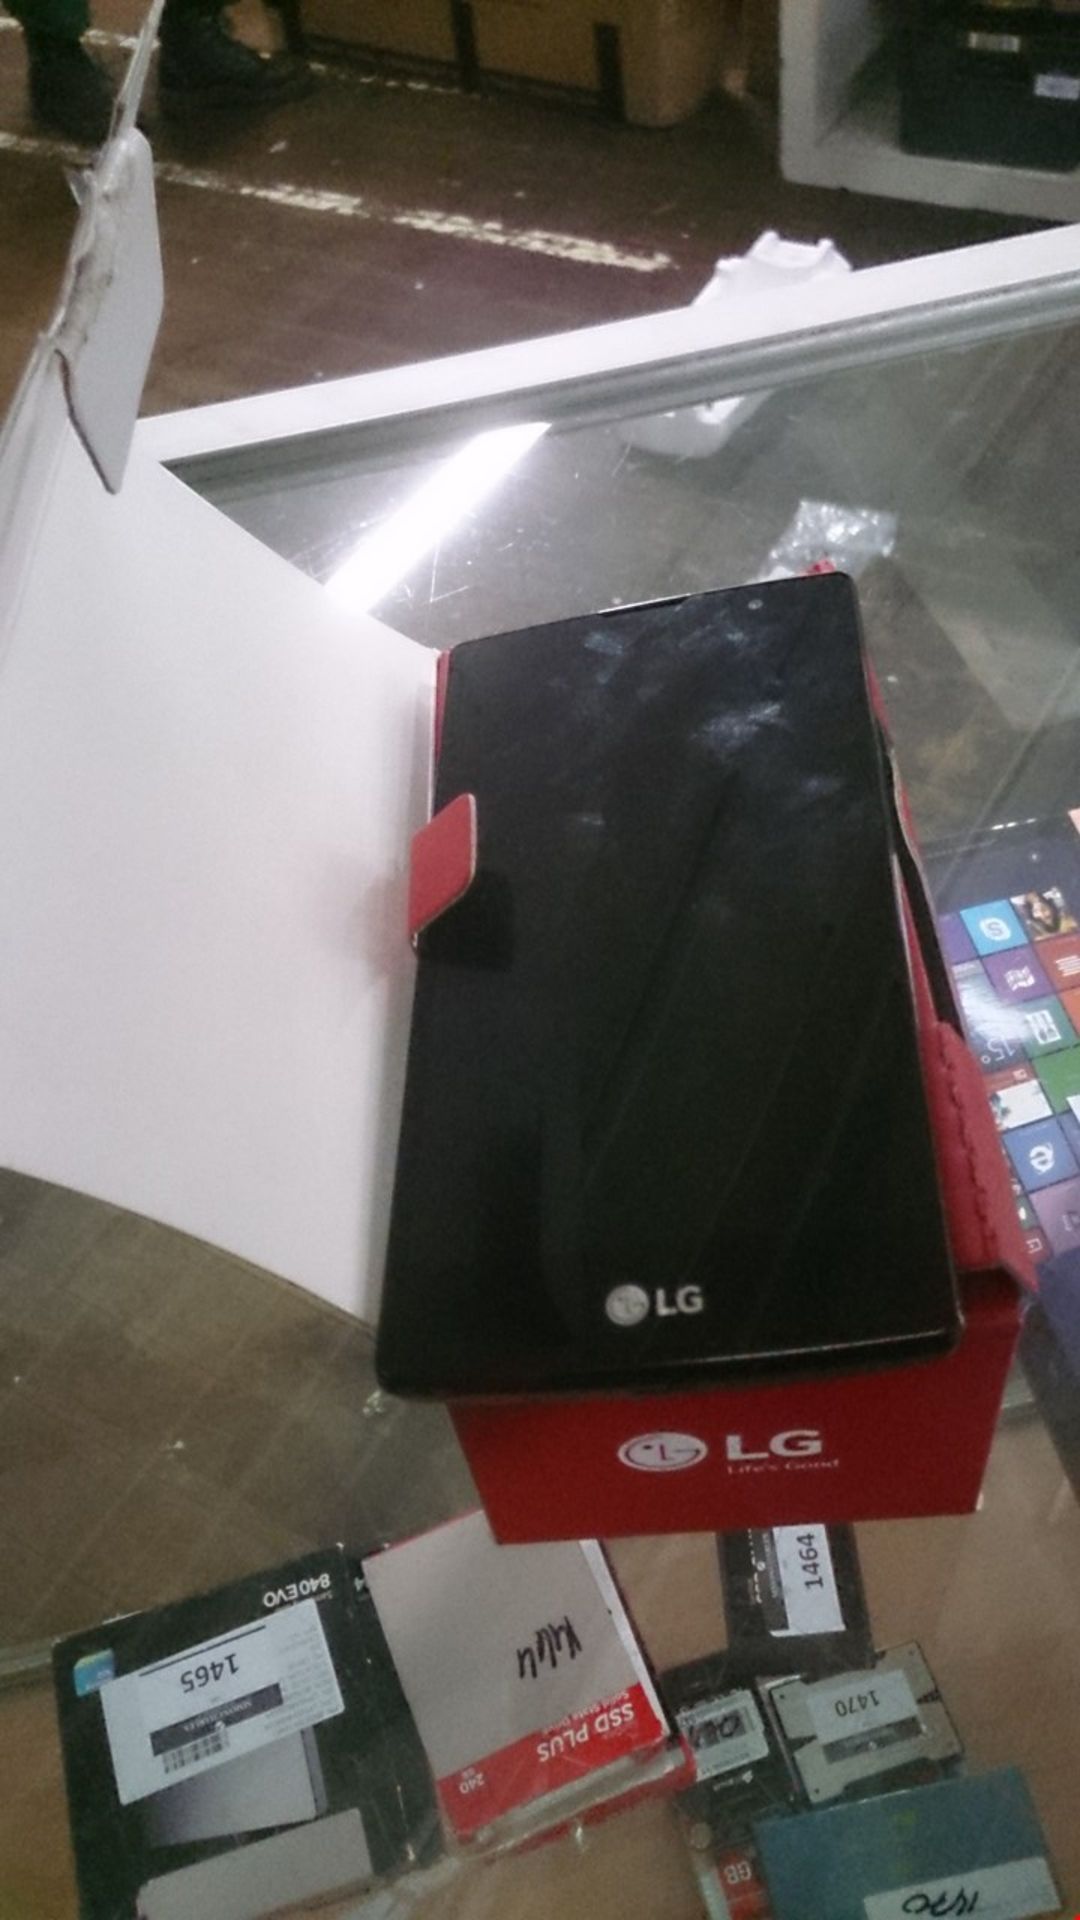 BOXED LG G4C SMARTPHONE